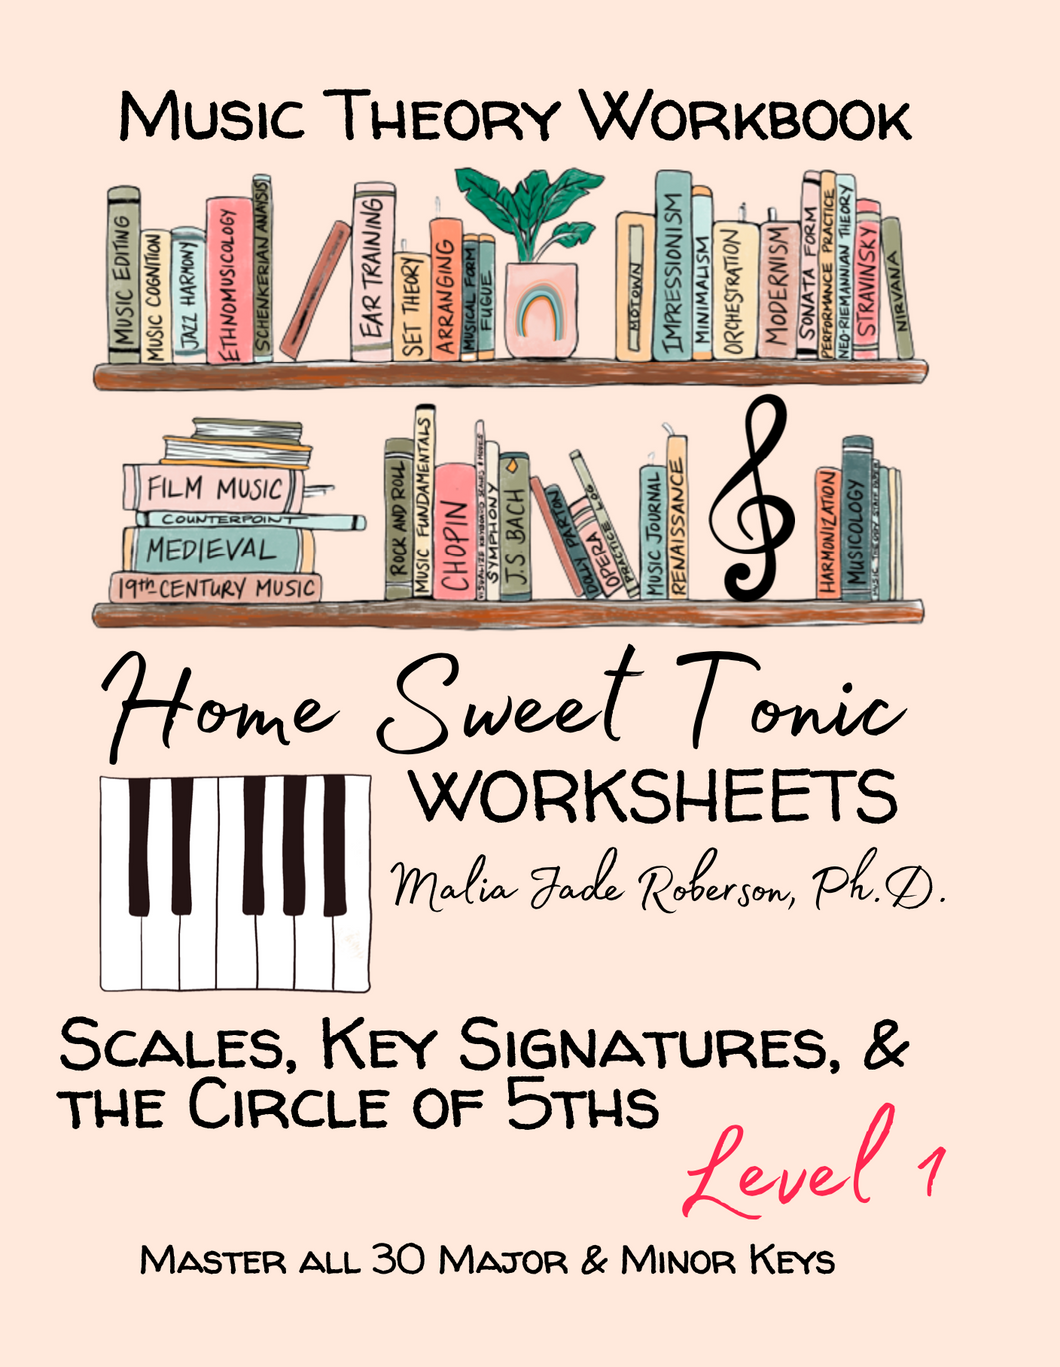 Home Sweet Tonic Workbook